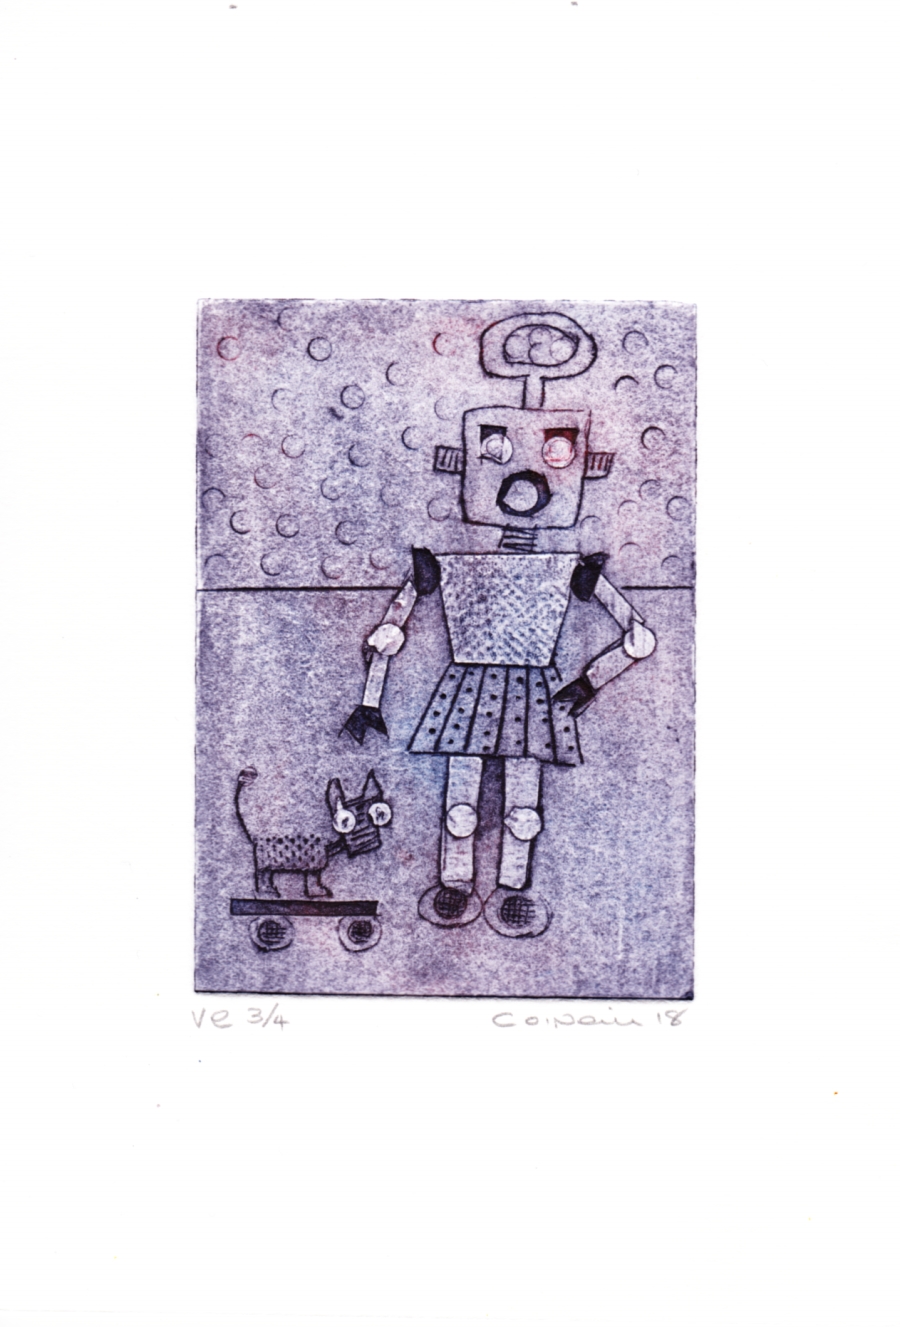 Little Robot 3.4.  - Collagraph Print